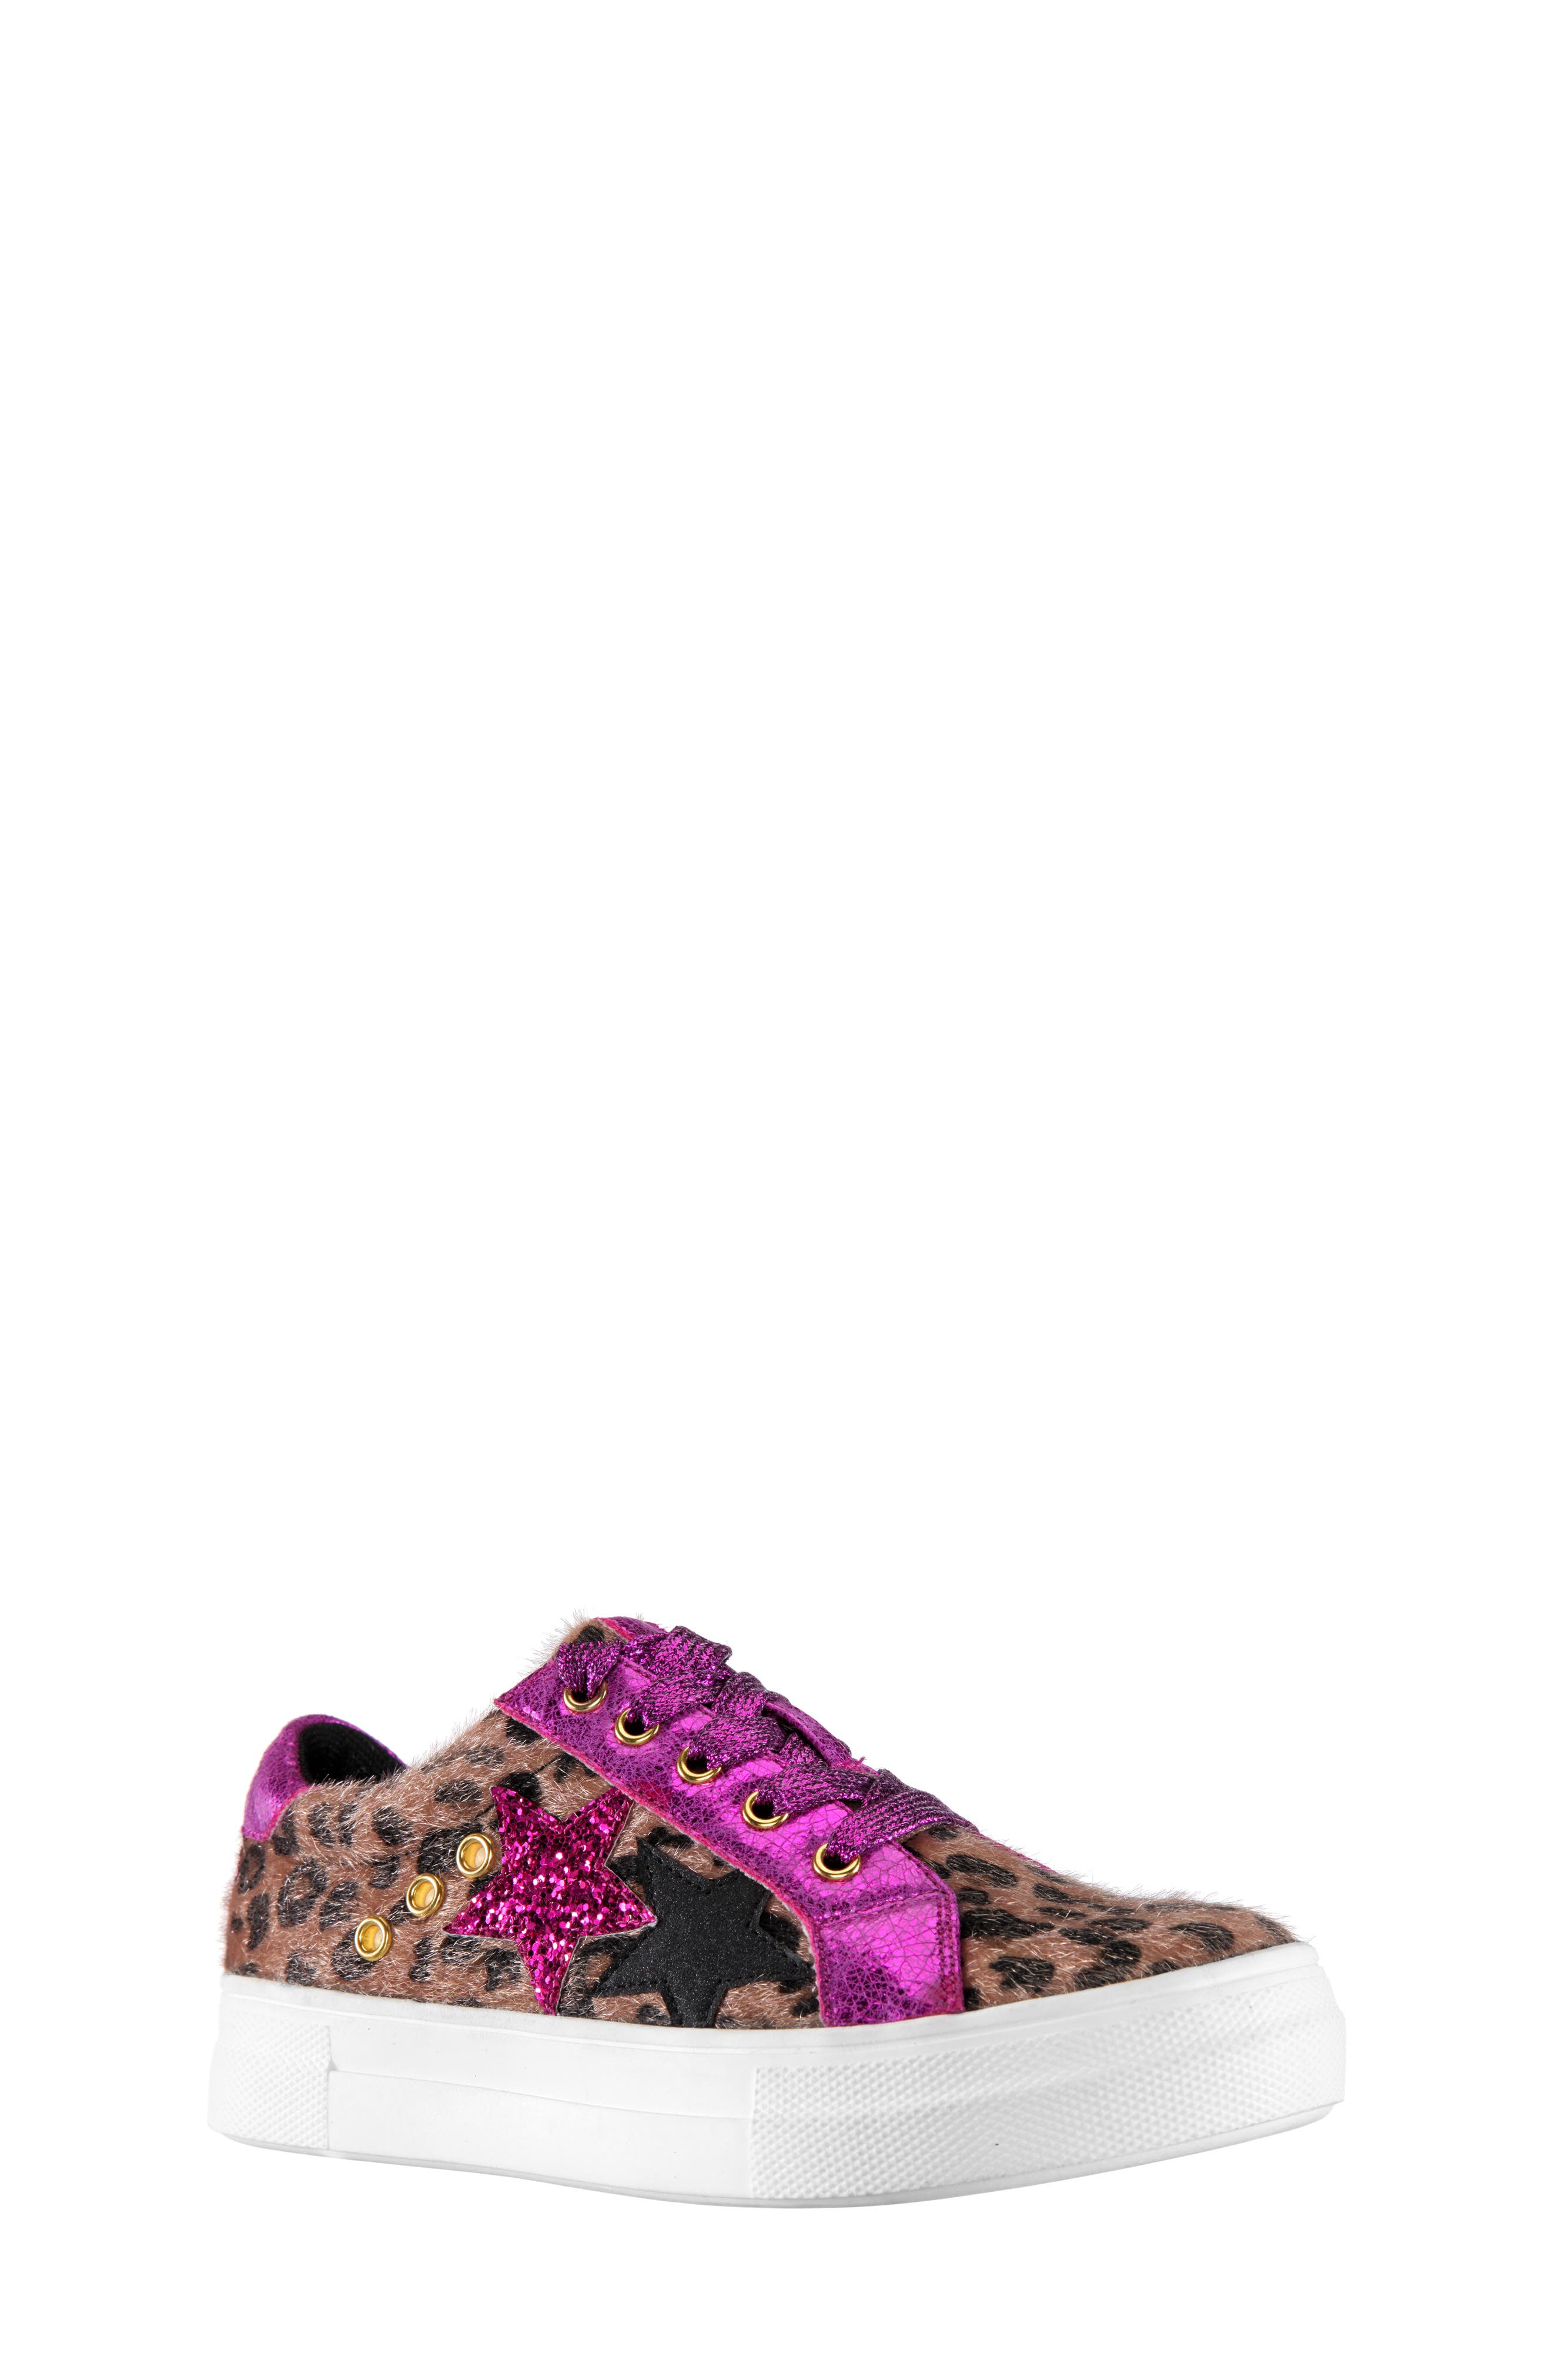 UPC 794378405153 product image for Girl's Nina Lizzet Glitter Sneaker, Size 2 M - Pink | upcitemdb.com